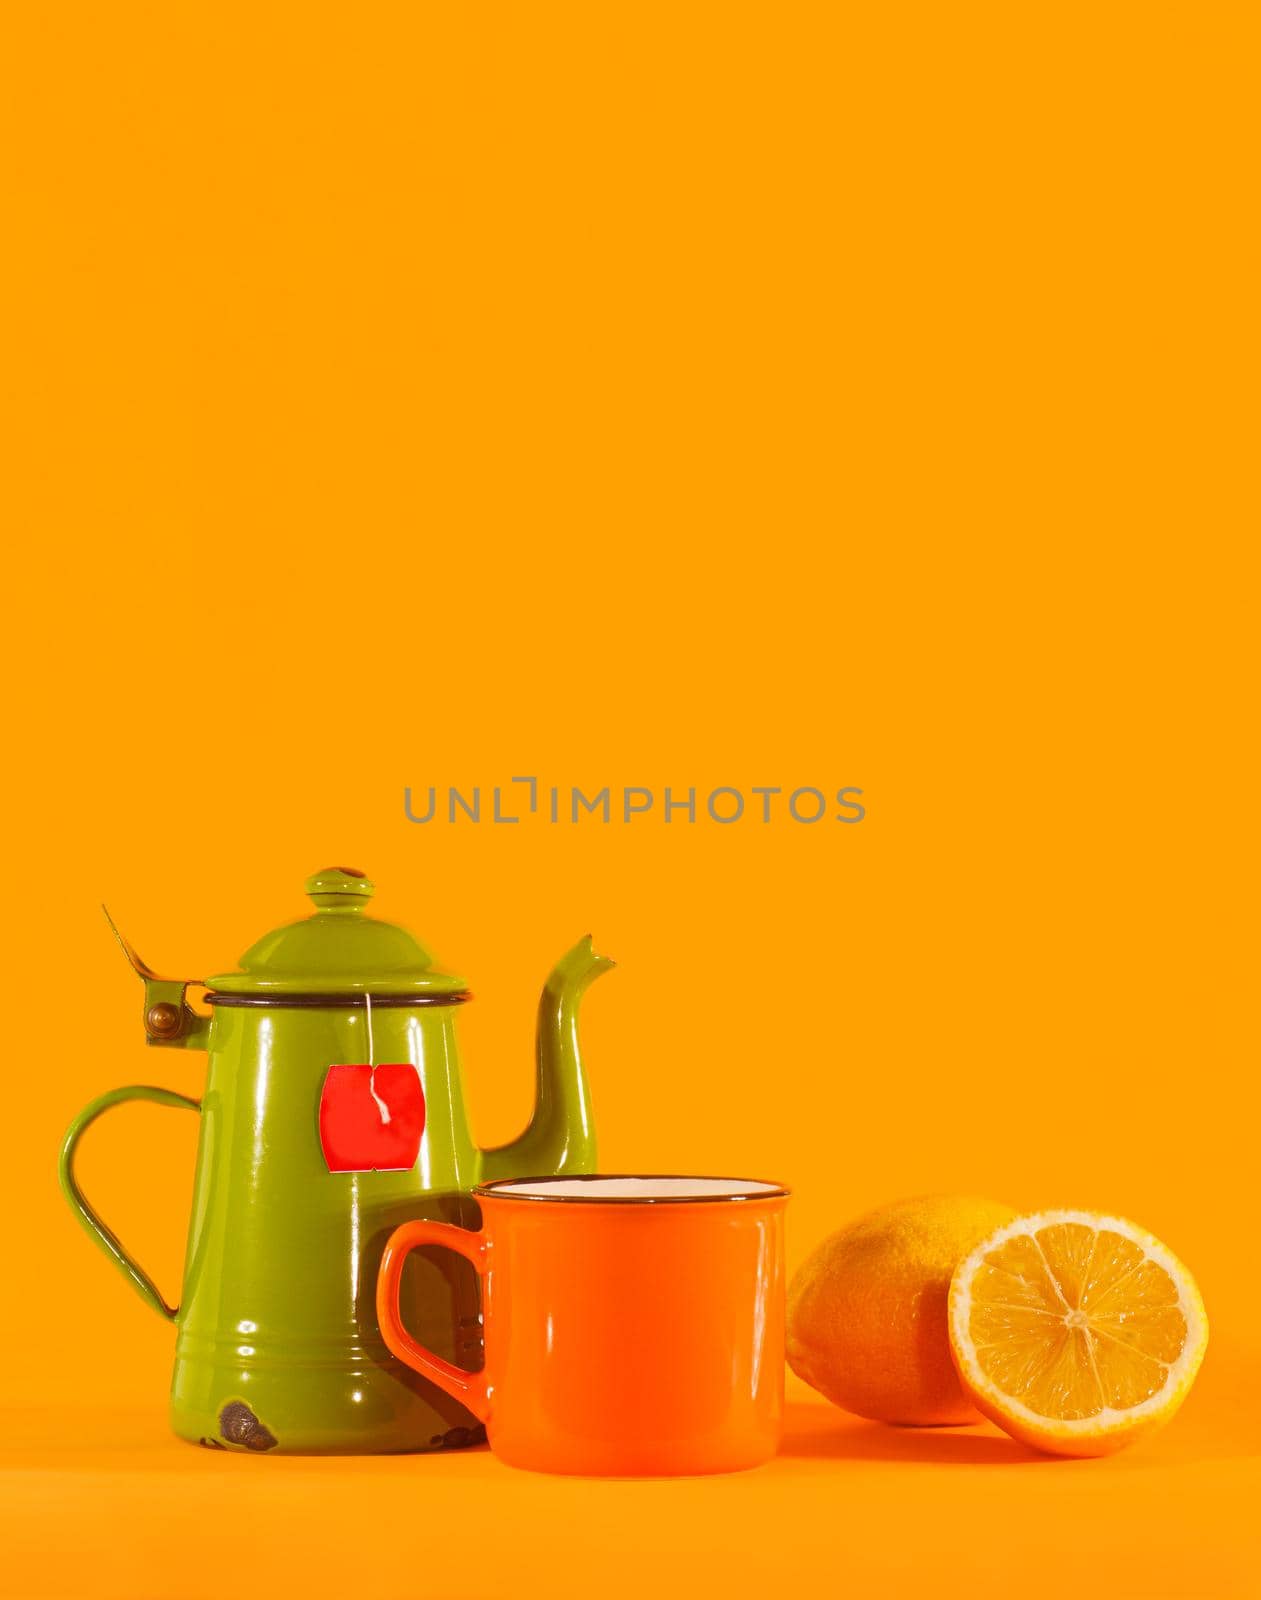 Vintage teacup and orange cup on orange background. Copy space on top by bepsimage